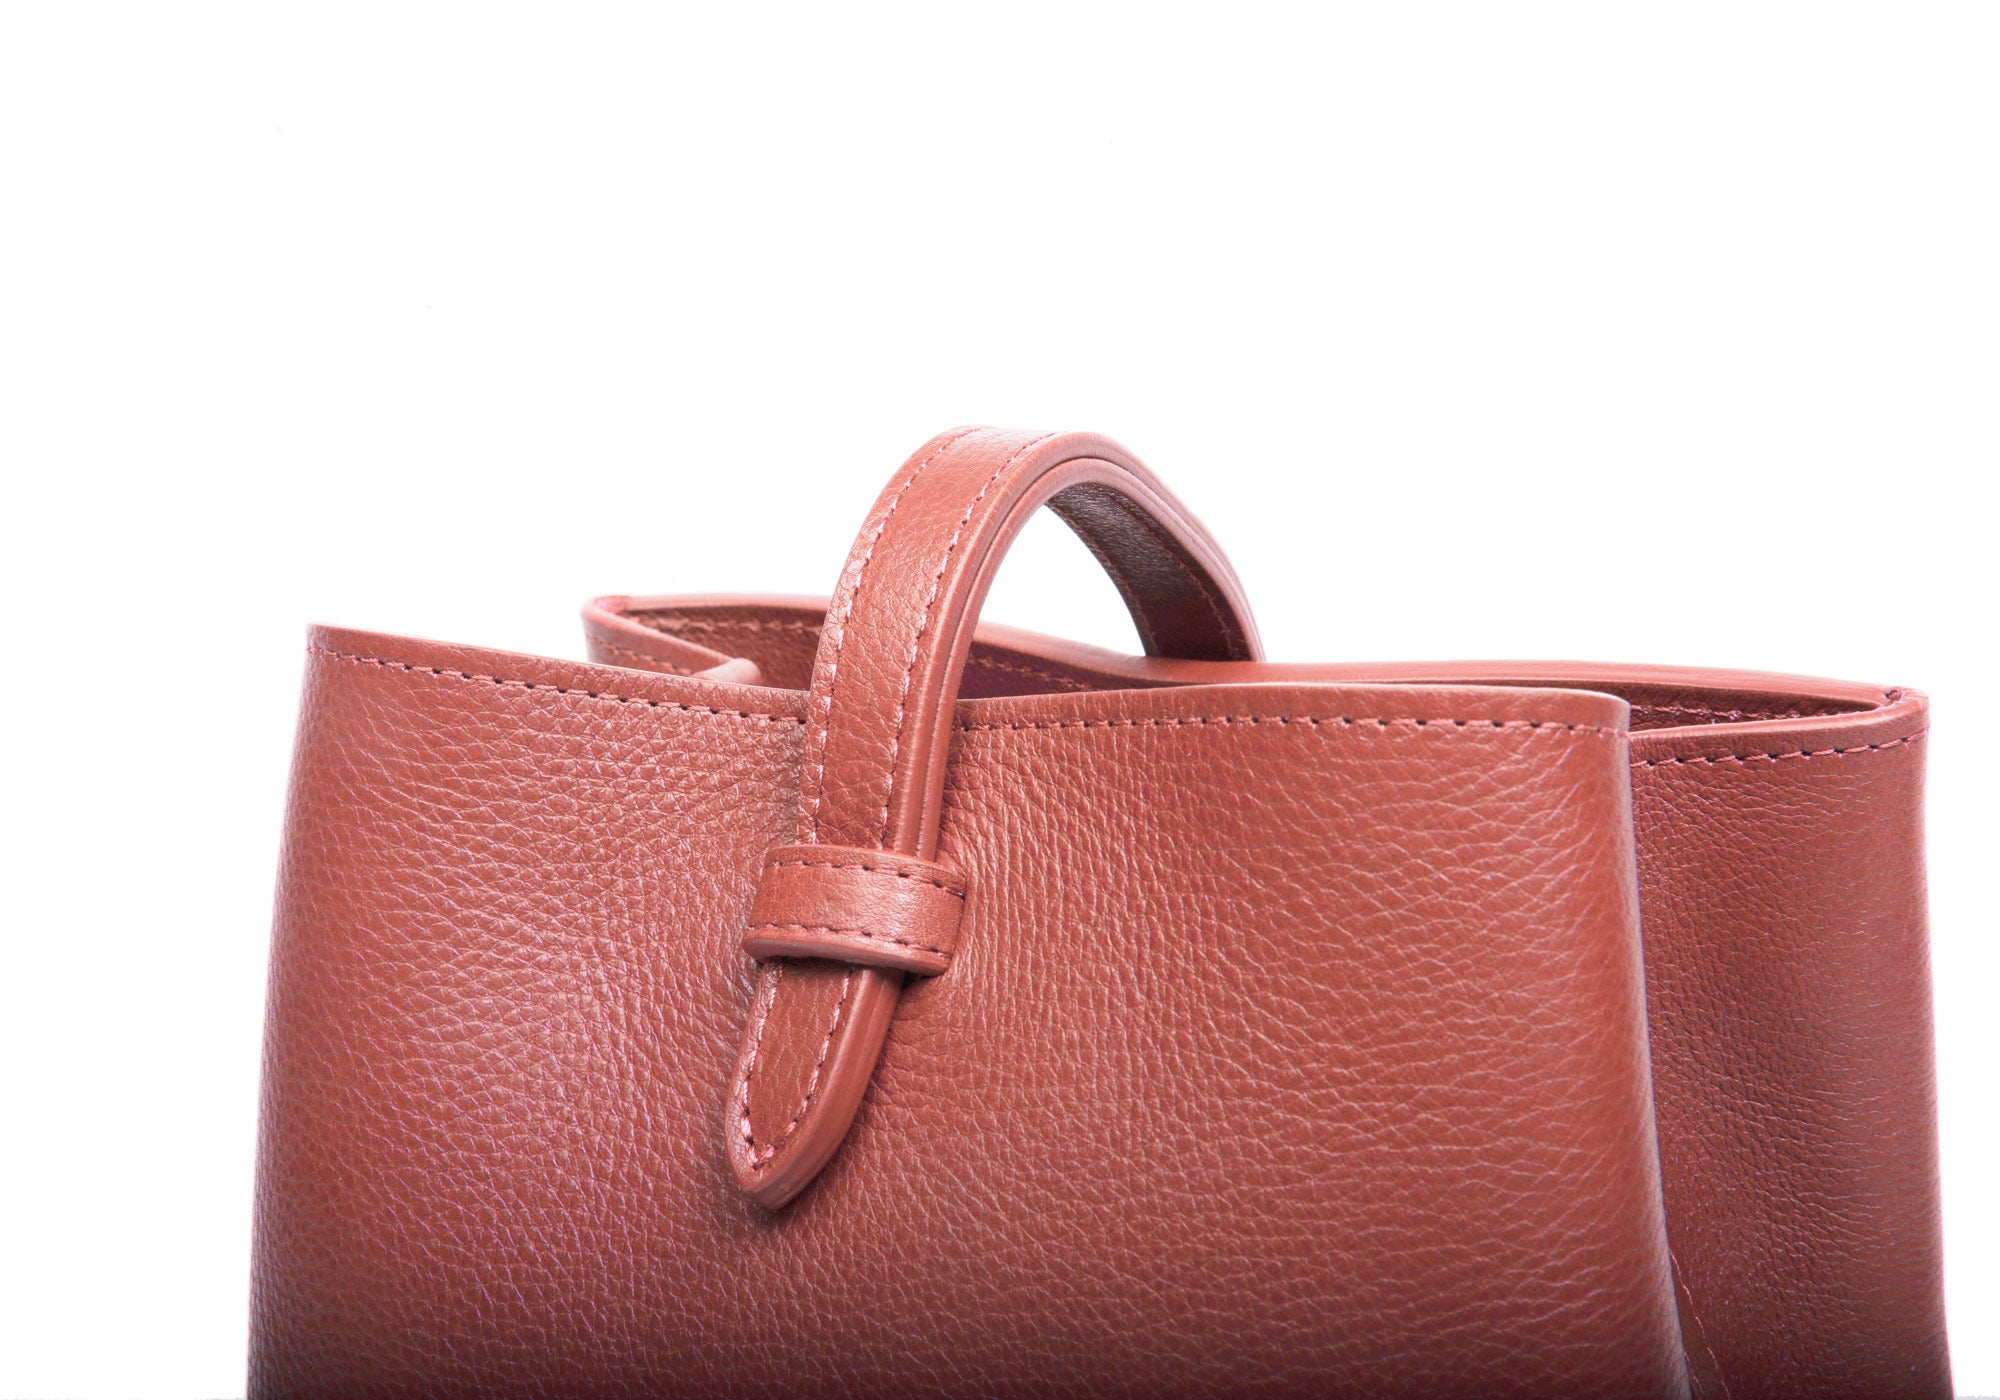 The Leather Mini Sling Bag